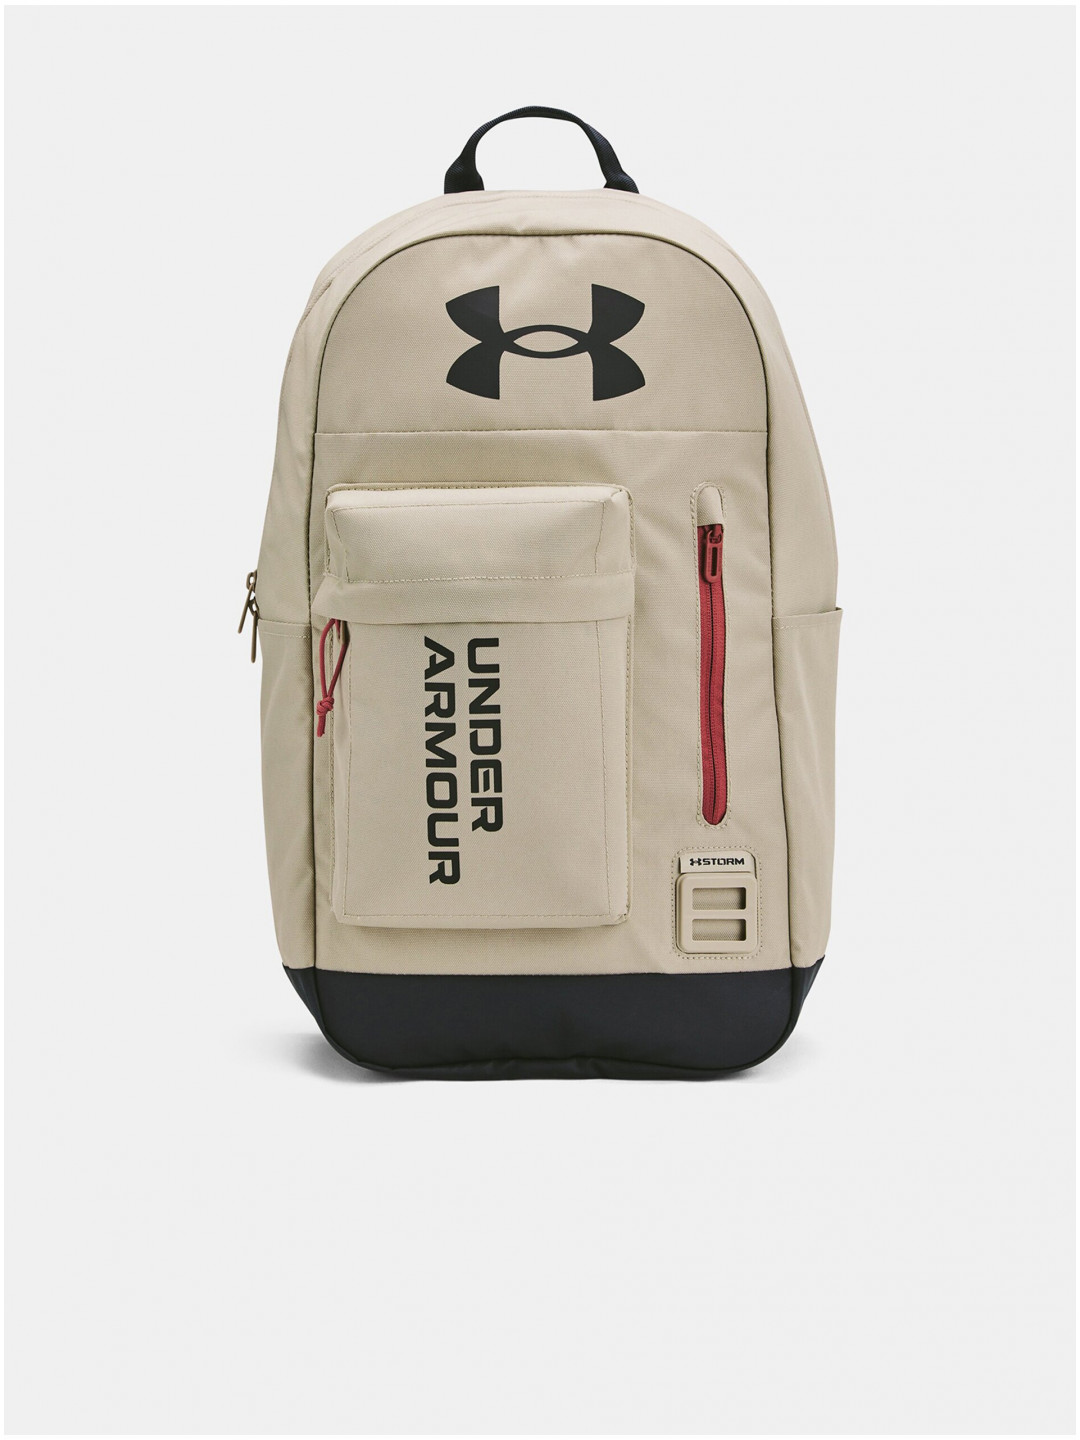 Světle hnědý batoh Under Armour UA Halftime Backpack